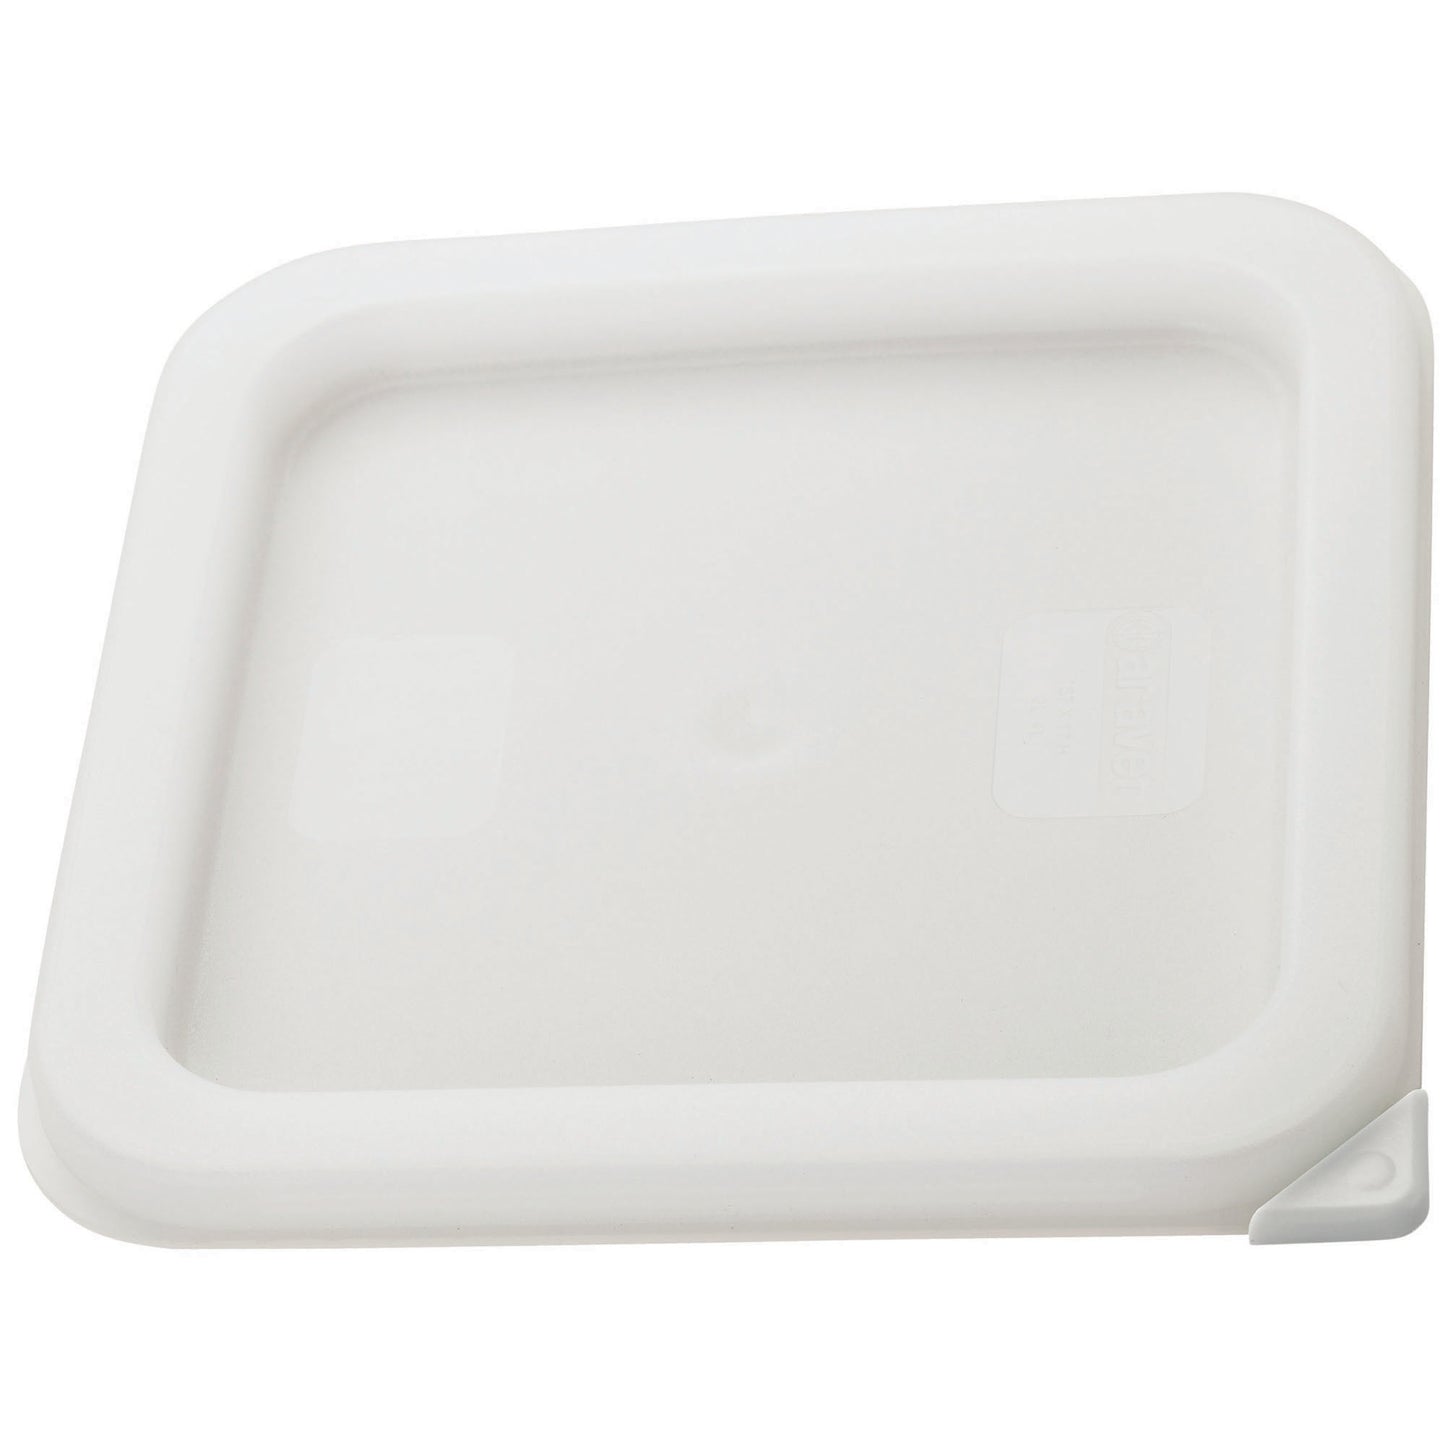 PECC-S - Cover for Square Storage Container - 2 | 4 Quart, White